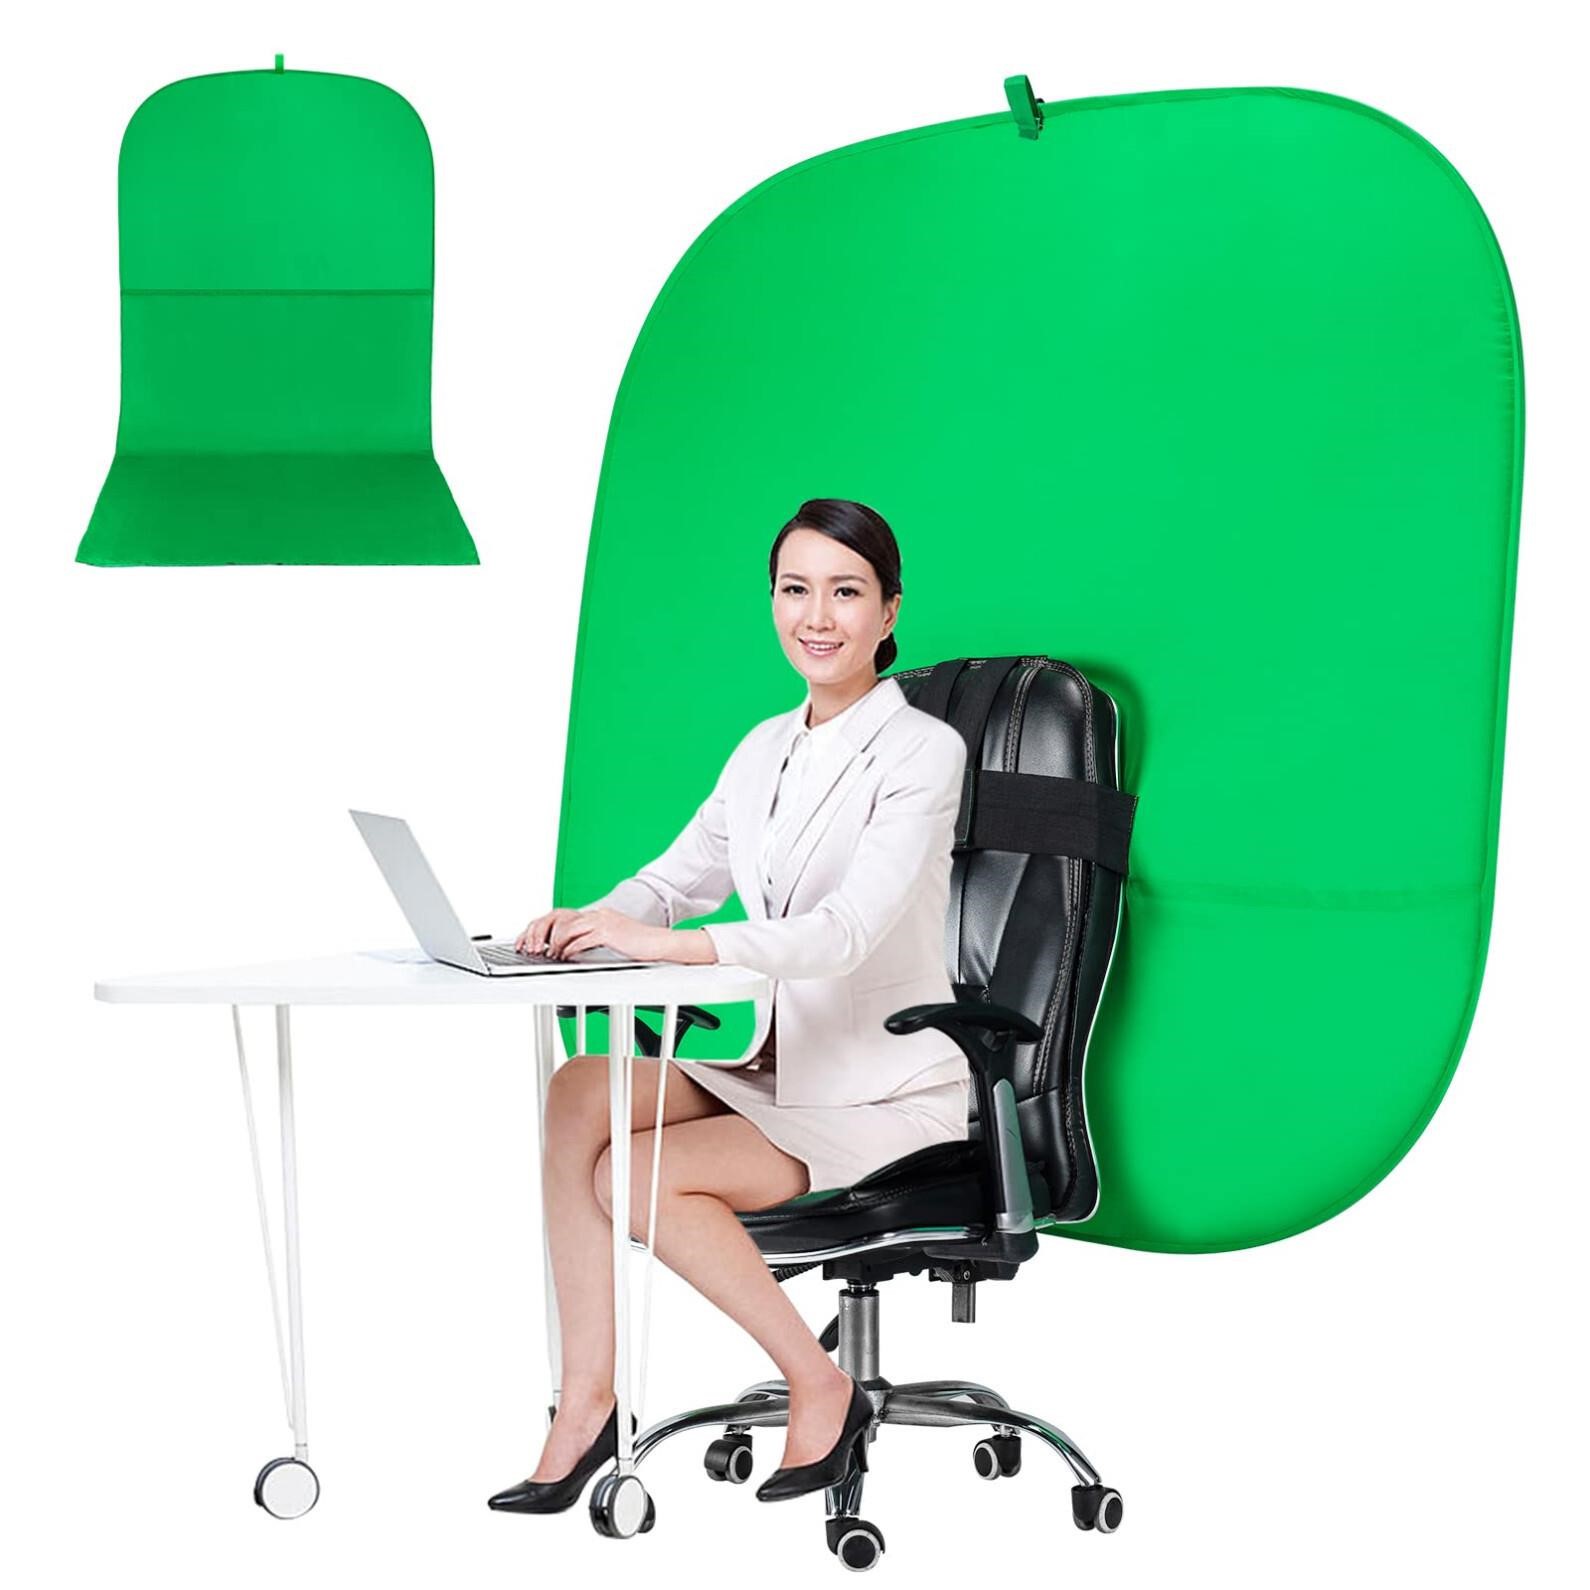 RGTBANWPN Green Screen Chair, 59in Portable Green